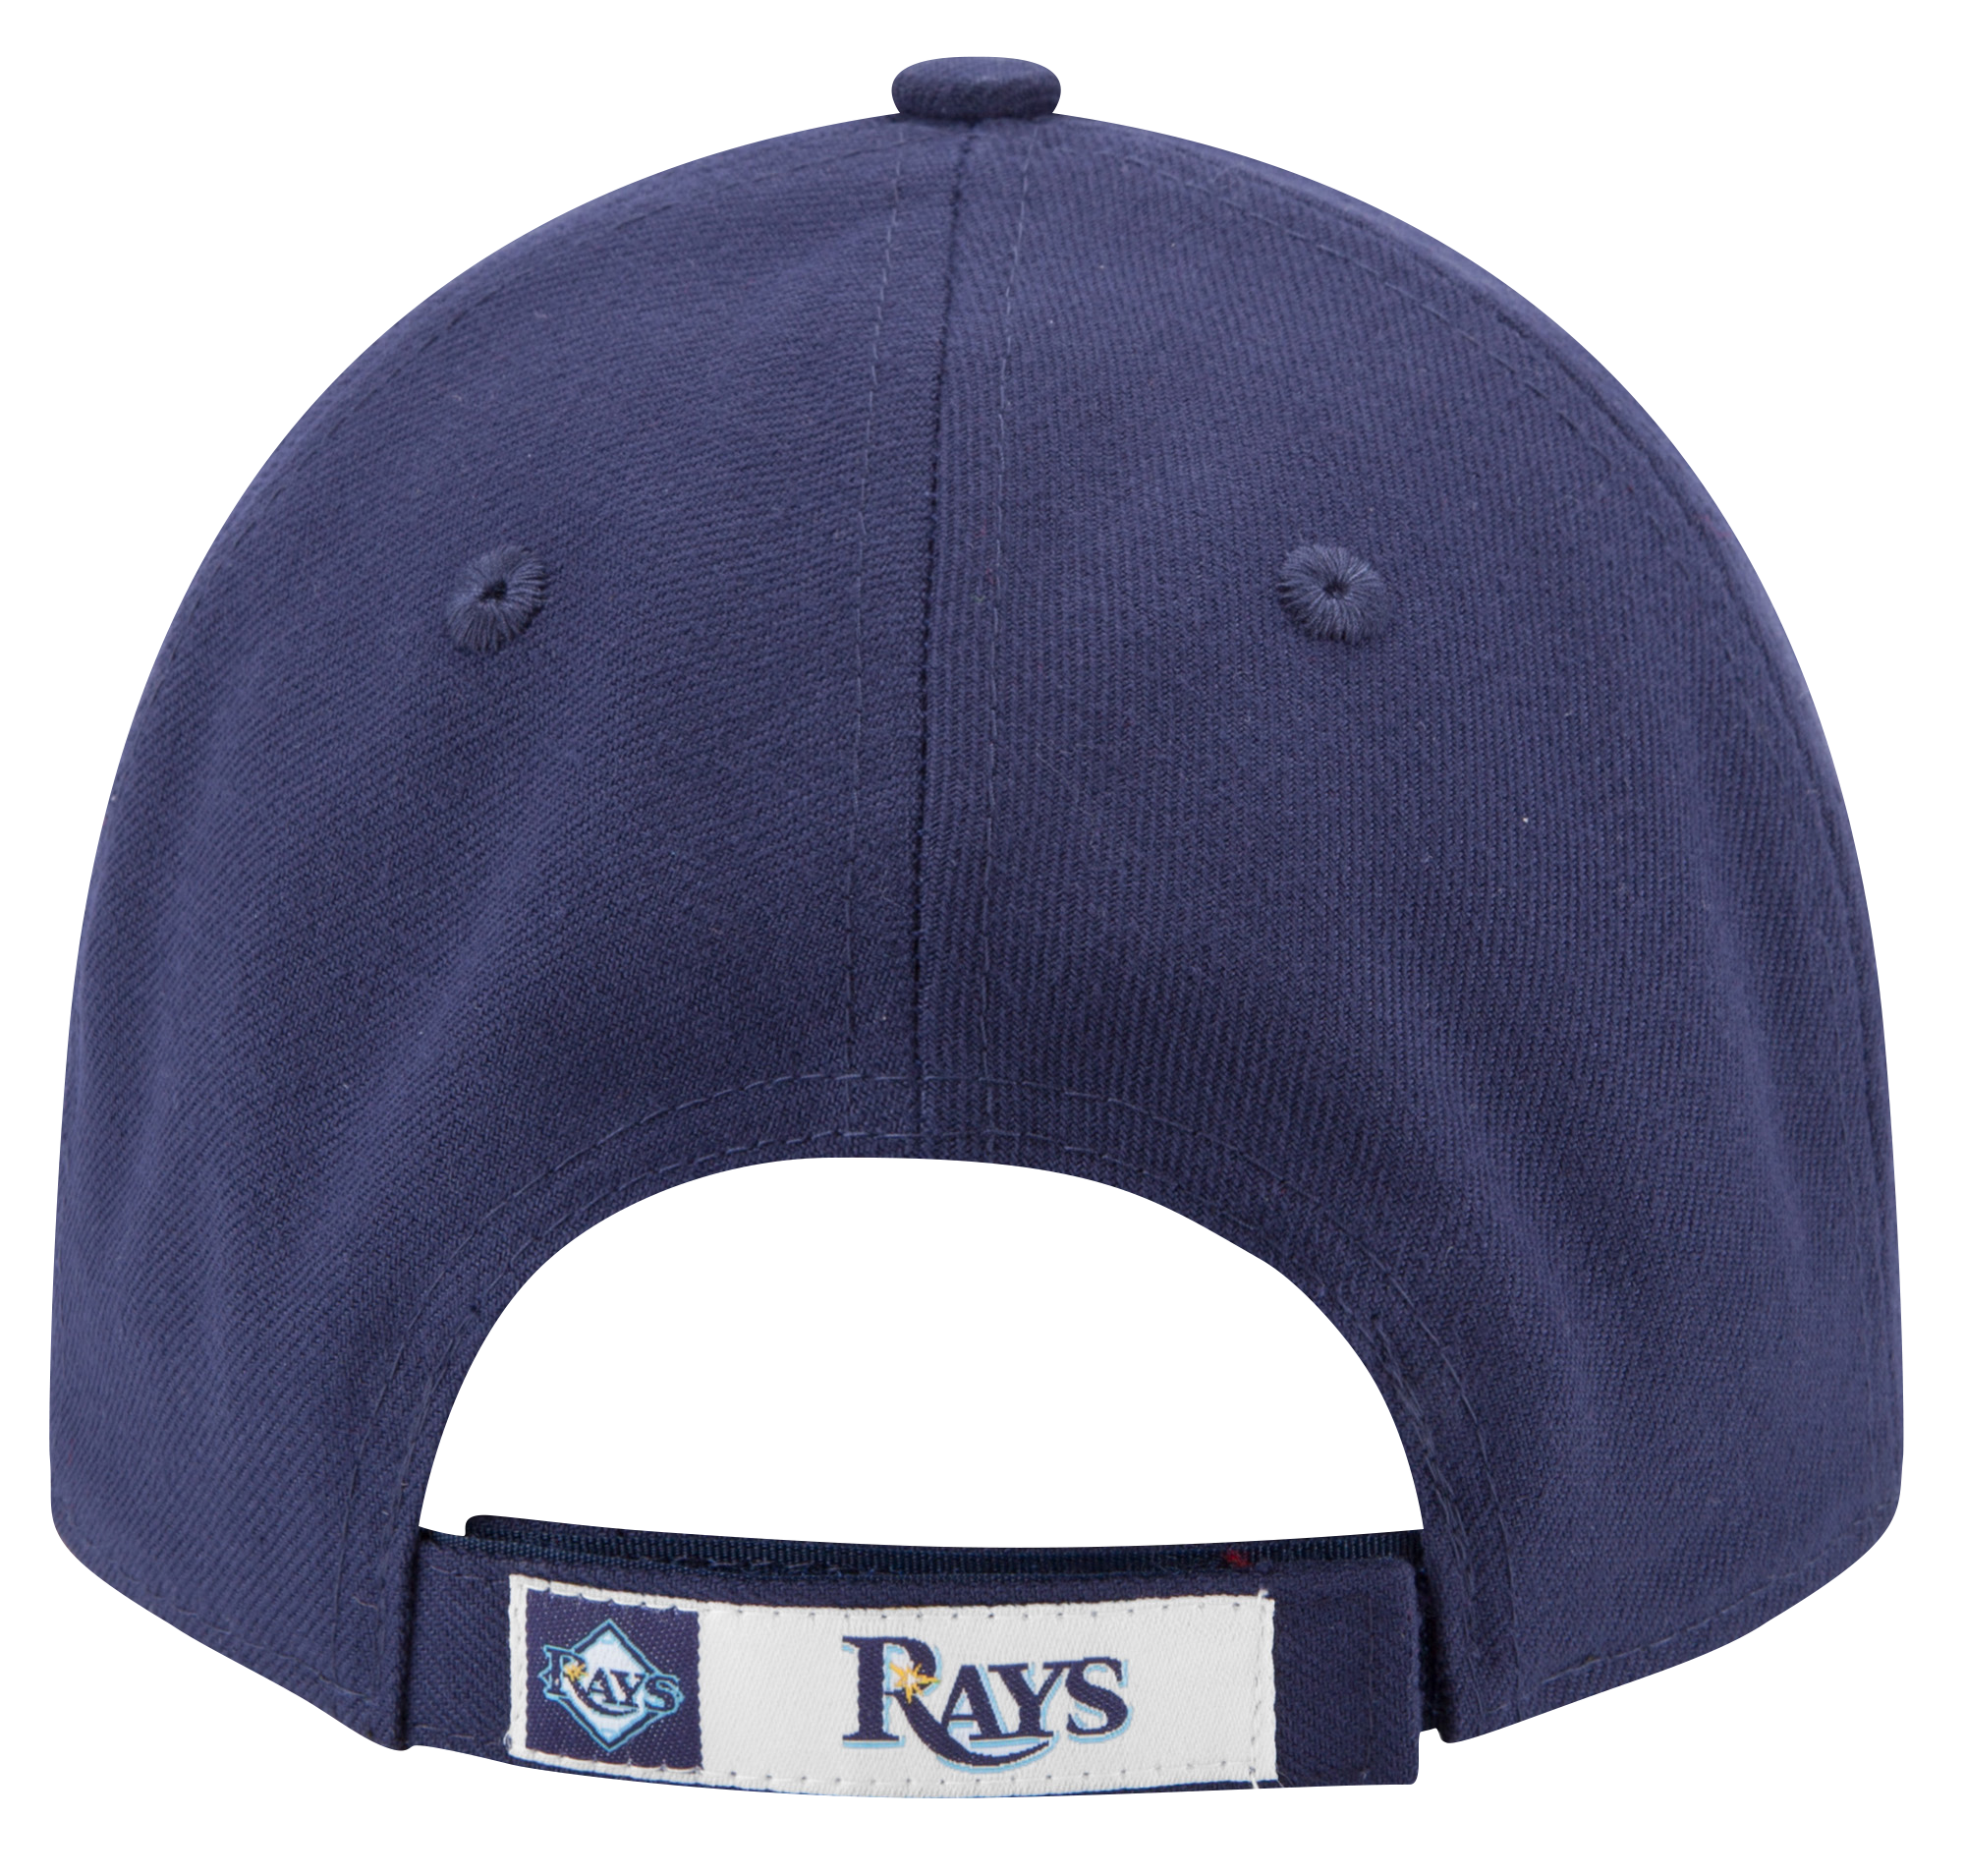 New Era Rays 9Forty Adjustable Cap